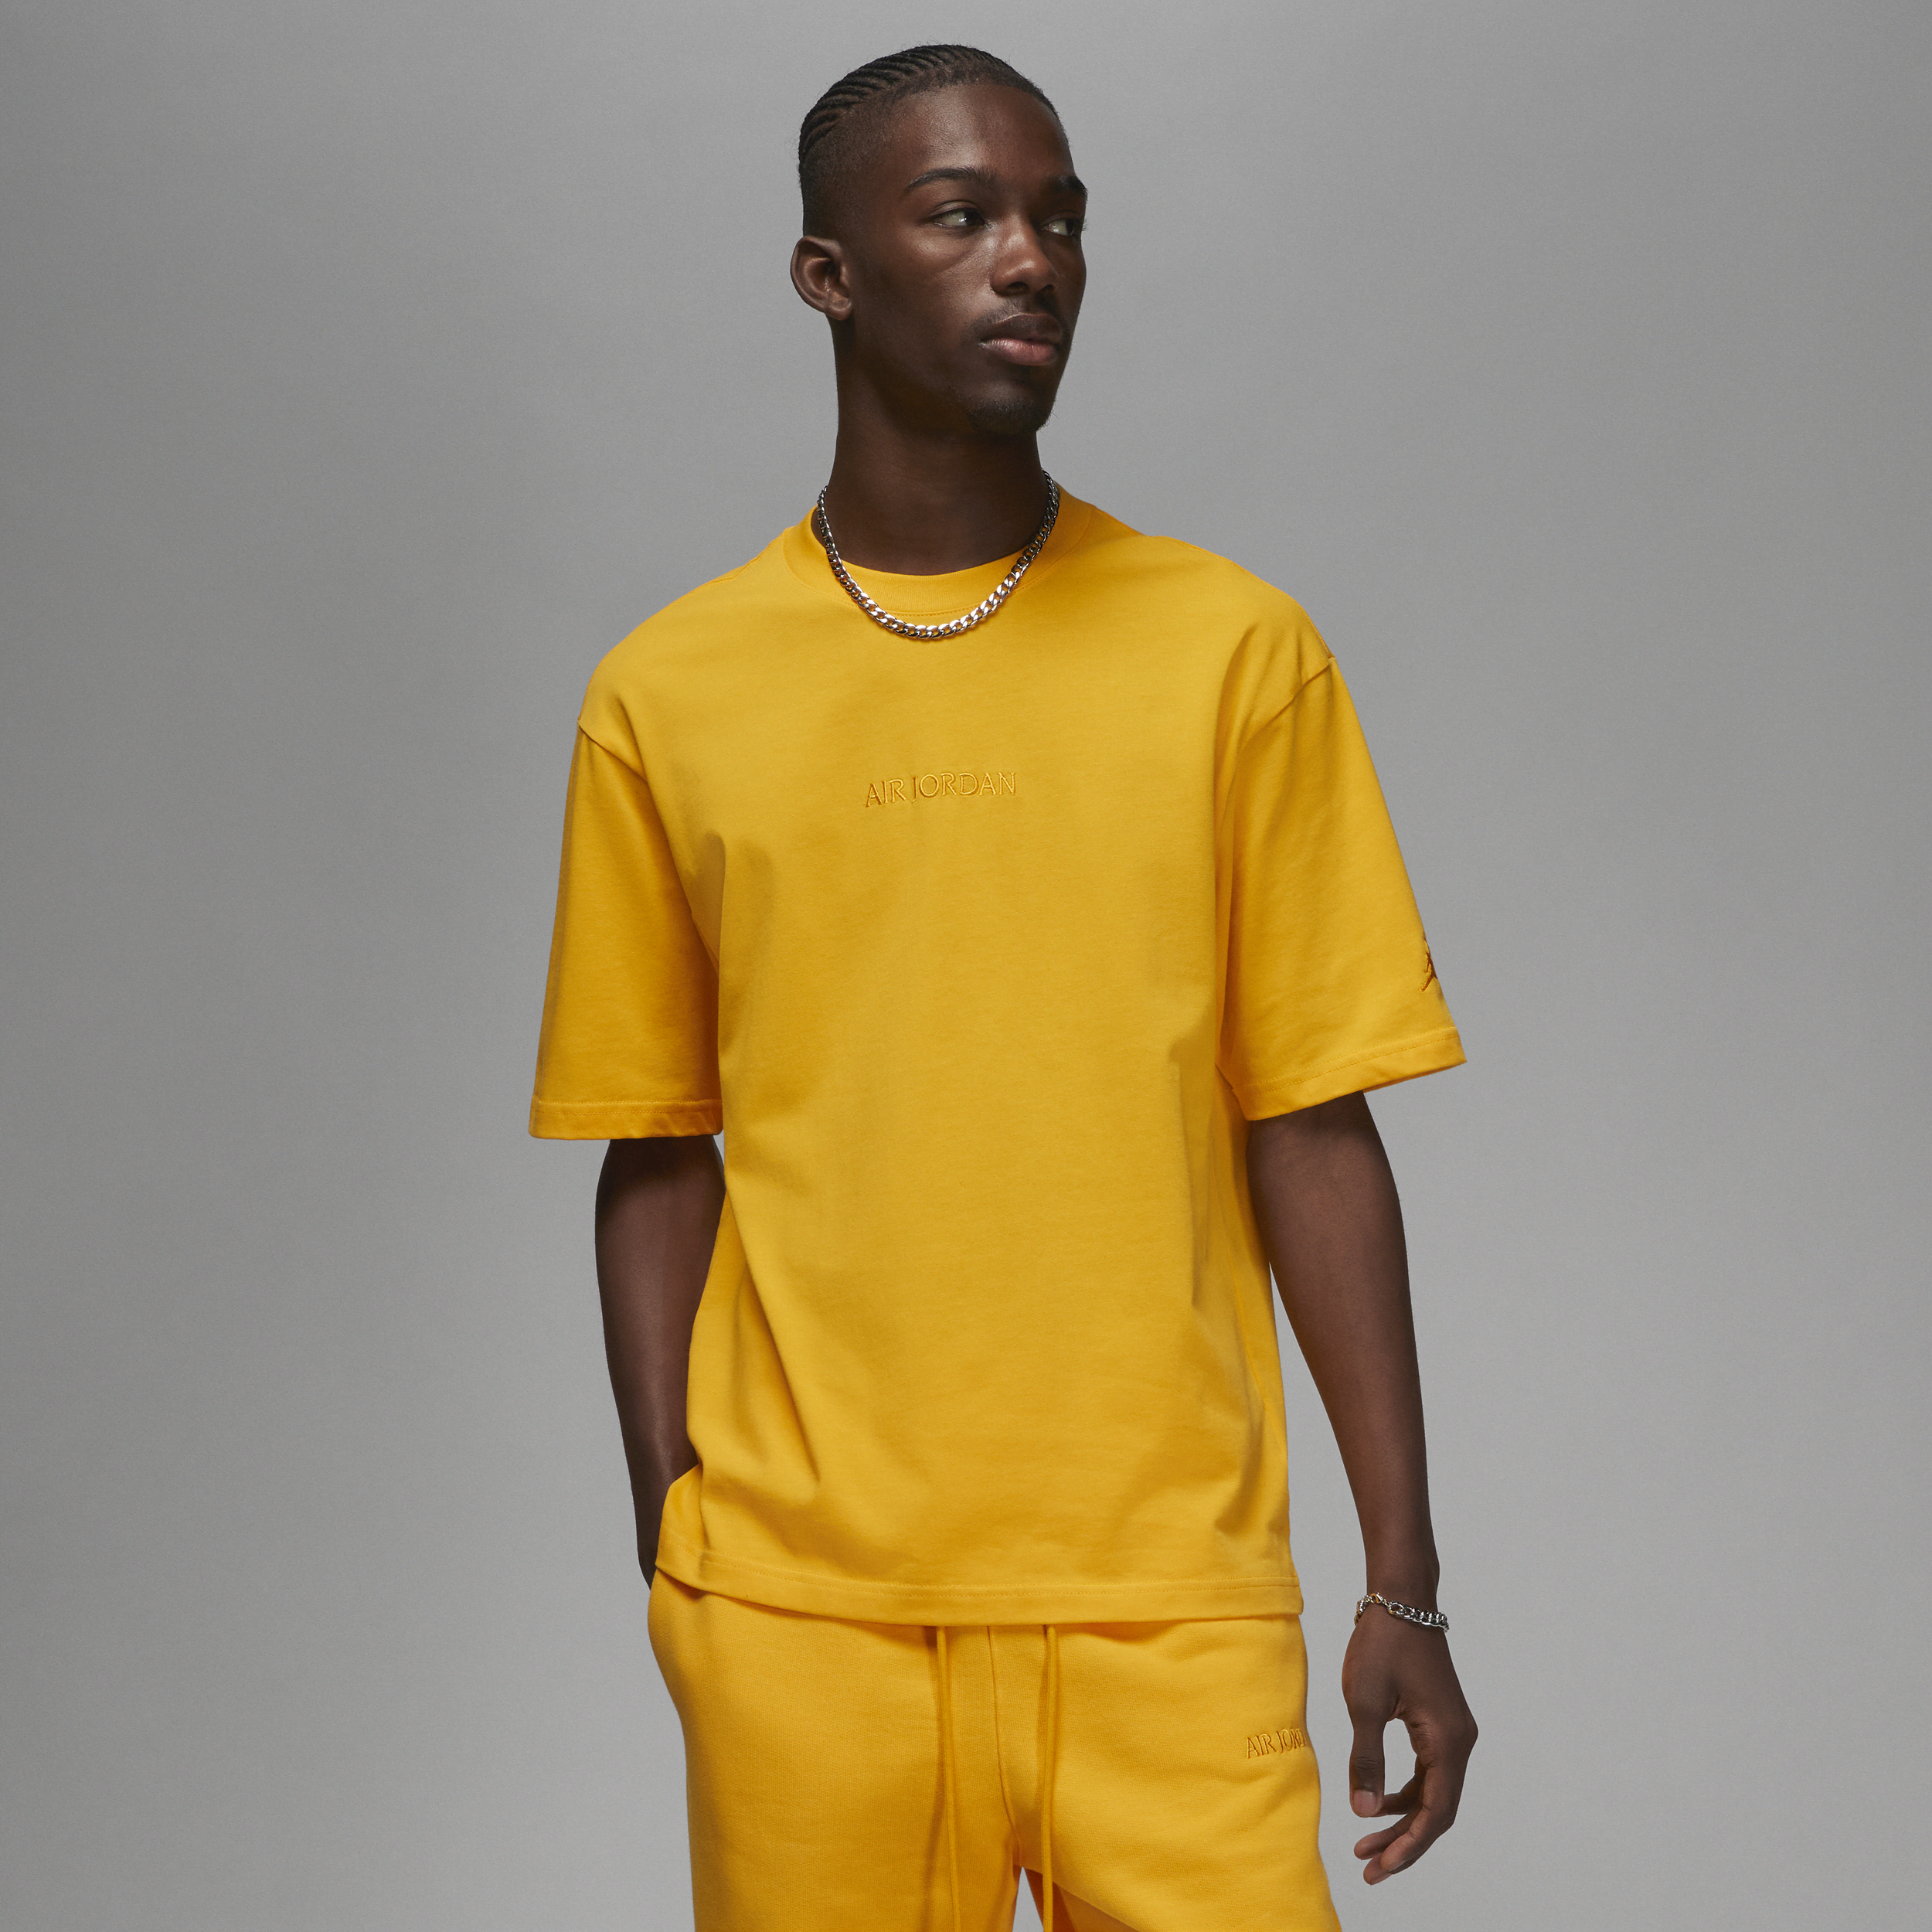 Air Jordan Wordmark Camiseta - Hombre - Amarillo